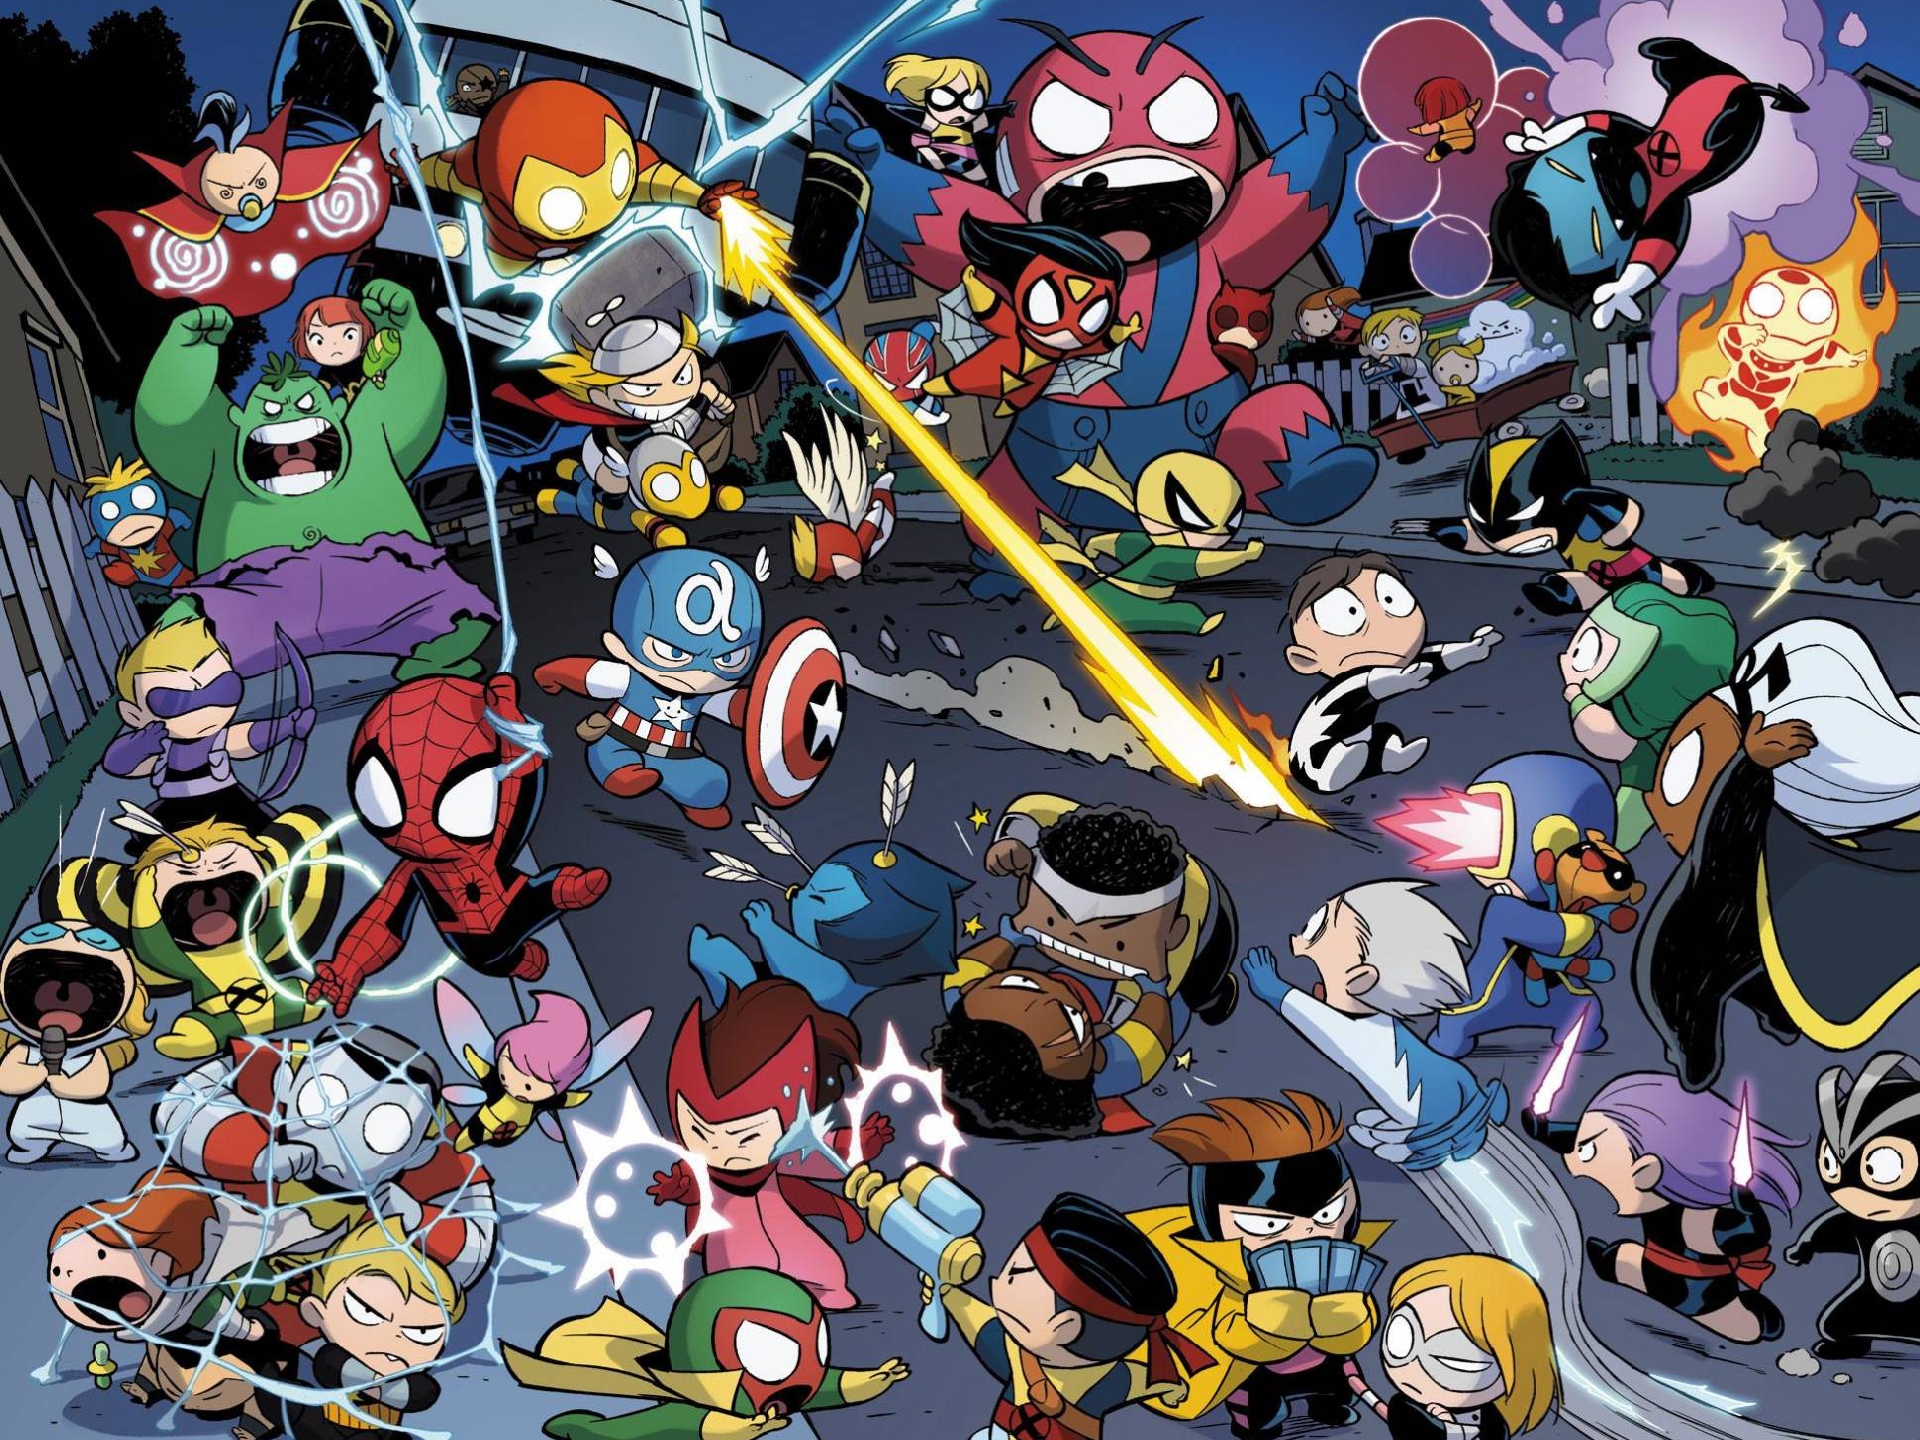 hulk, vision (marvel comics), colossus, quicksilver (marvel comics), comics, avengers vs x men babies, angel (marvel comics), avengers, banshee (marvel comics), beast (marvel comics), bishop (marvel comics), black widow, captain america, carol danvers, cyclops (marvel comics), dazzler (marvel comics), gambit (marvel comics), giant man, havok (marvel comics), hawkeye, hope summers, human torch (marvel comics), iron fist (marvel comics), iron man, longshot (marvel comics), luke cage, ms marvel, namor the sub mariner, nick fury, nightcrawler (marvel comics), pixie (marvel comics), polaris (marvel comics), power pack, psylocke (marvel comics), scarlet witch, spider man, spider woman, storm (marvel comics), wasp (marvel comics), wolverine, x men phone wallpaper